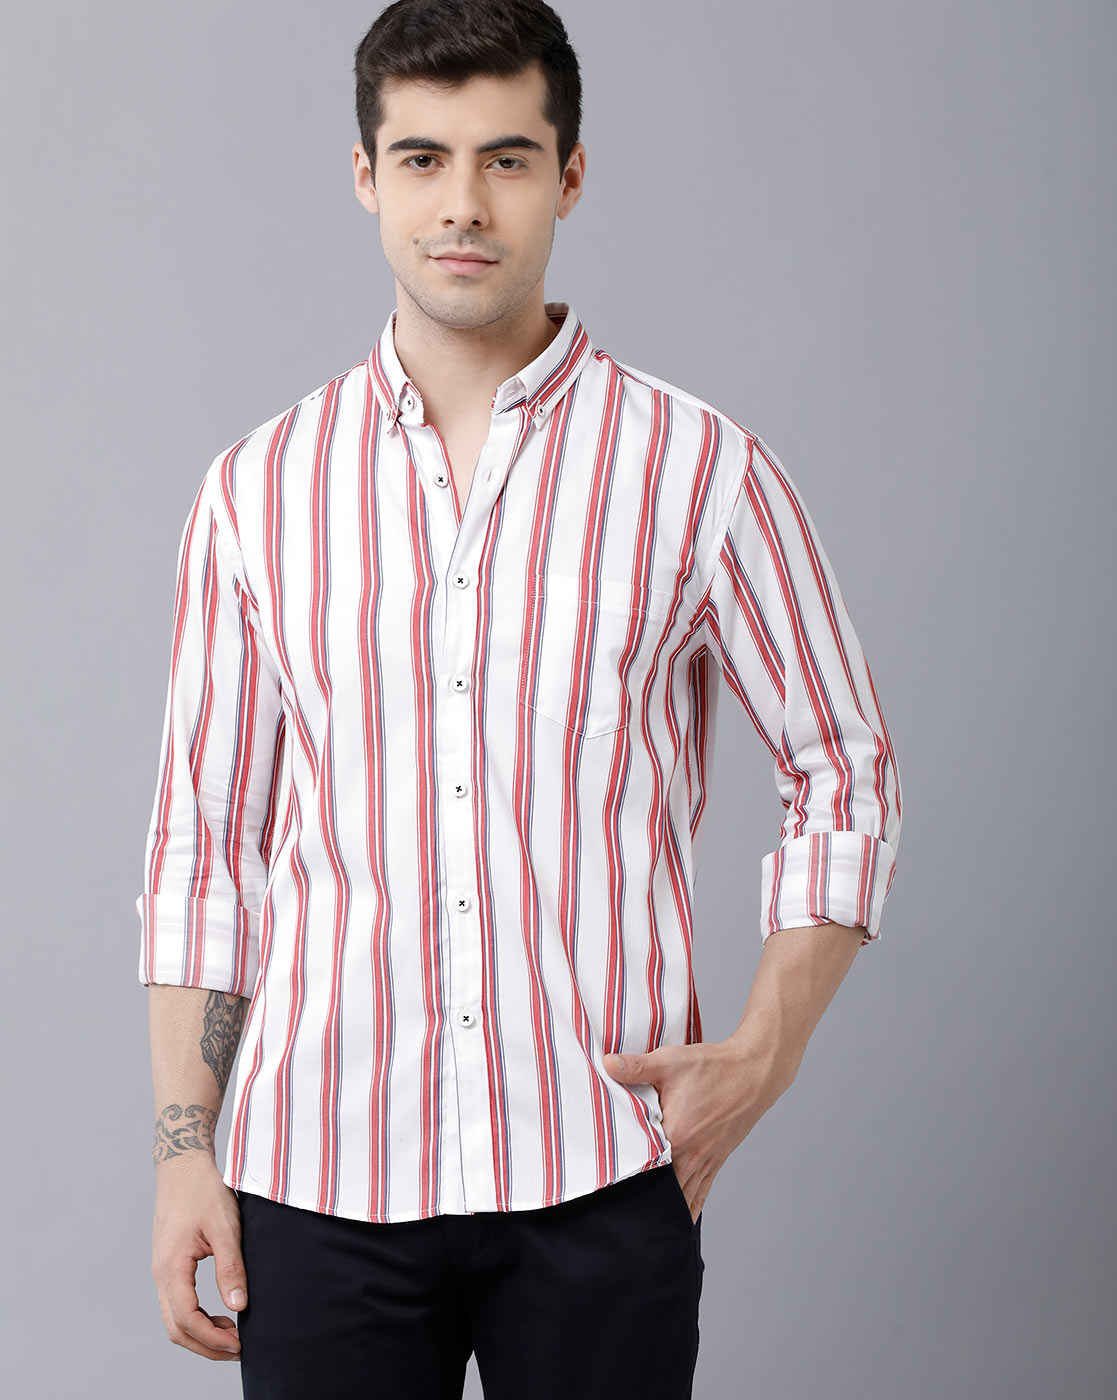 White striped shirt